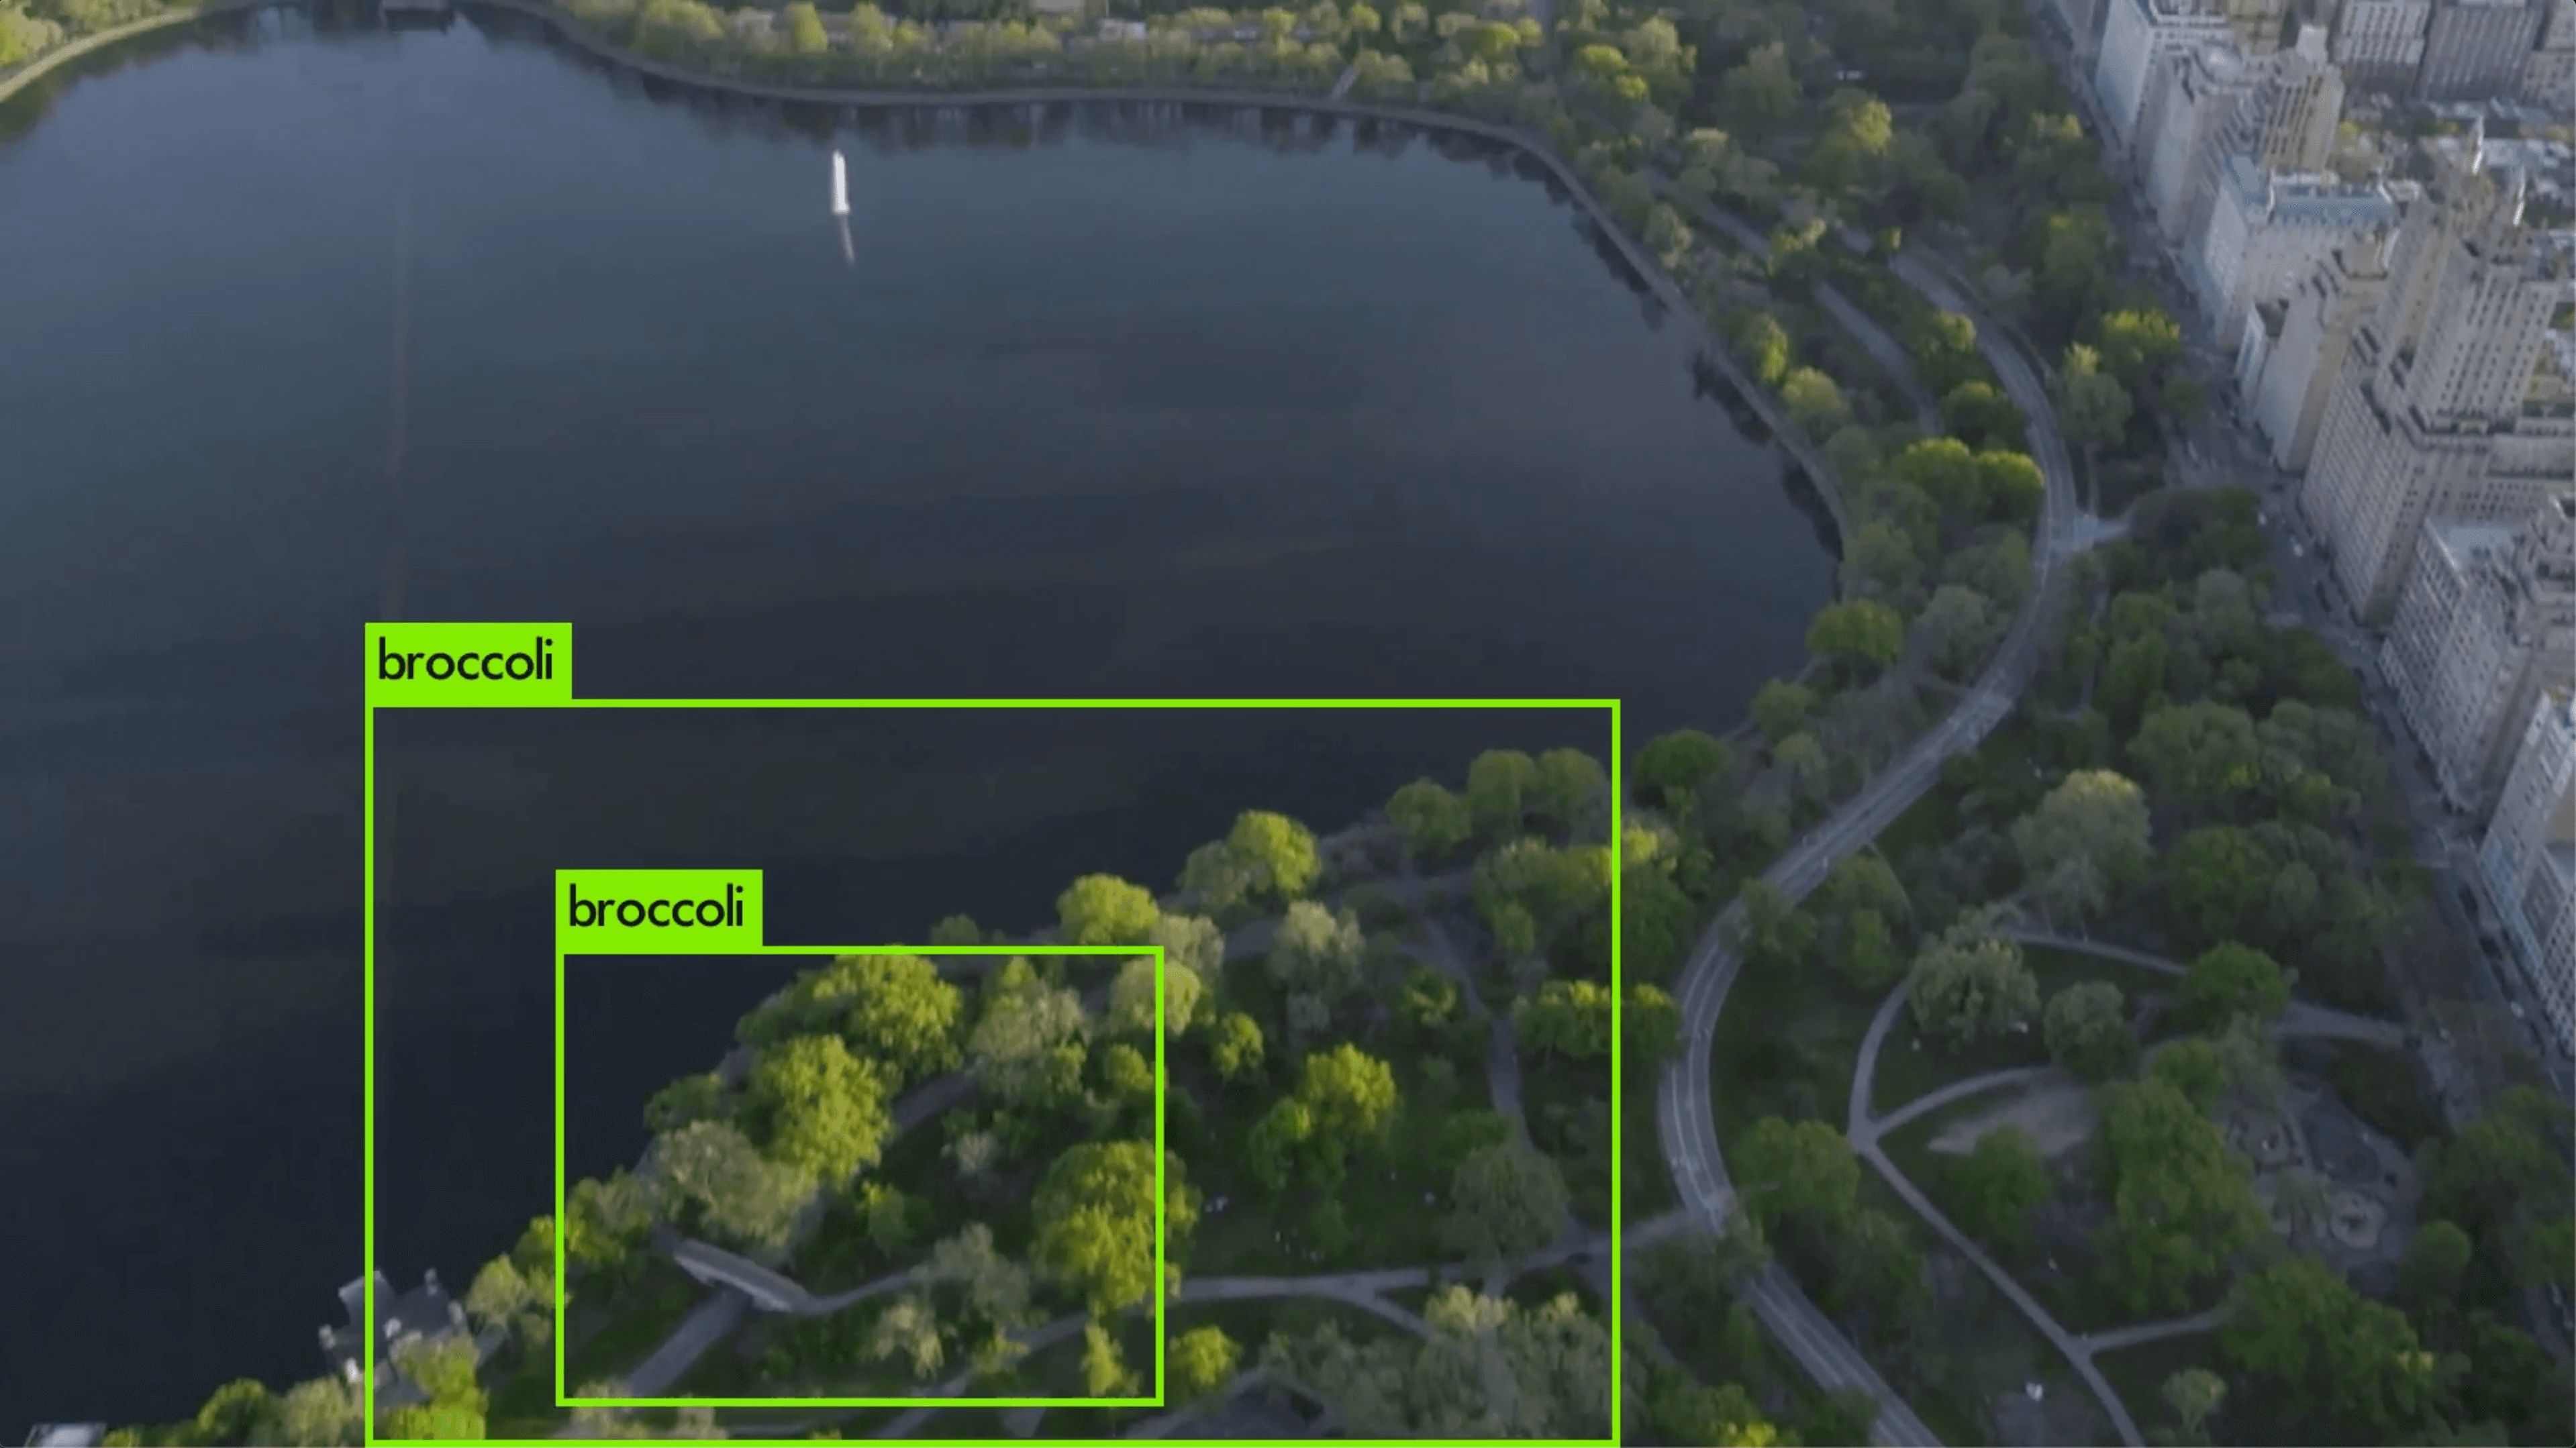 Figuur 4 Central Park, Imagenet9k, beeld: Tegenlicht 2018 